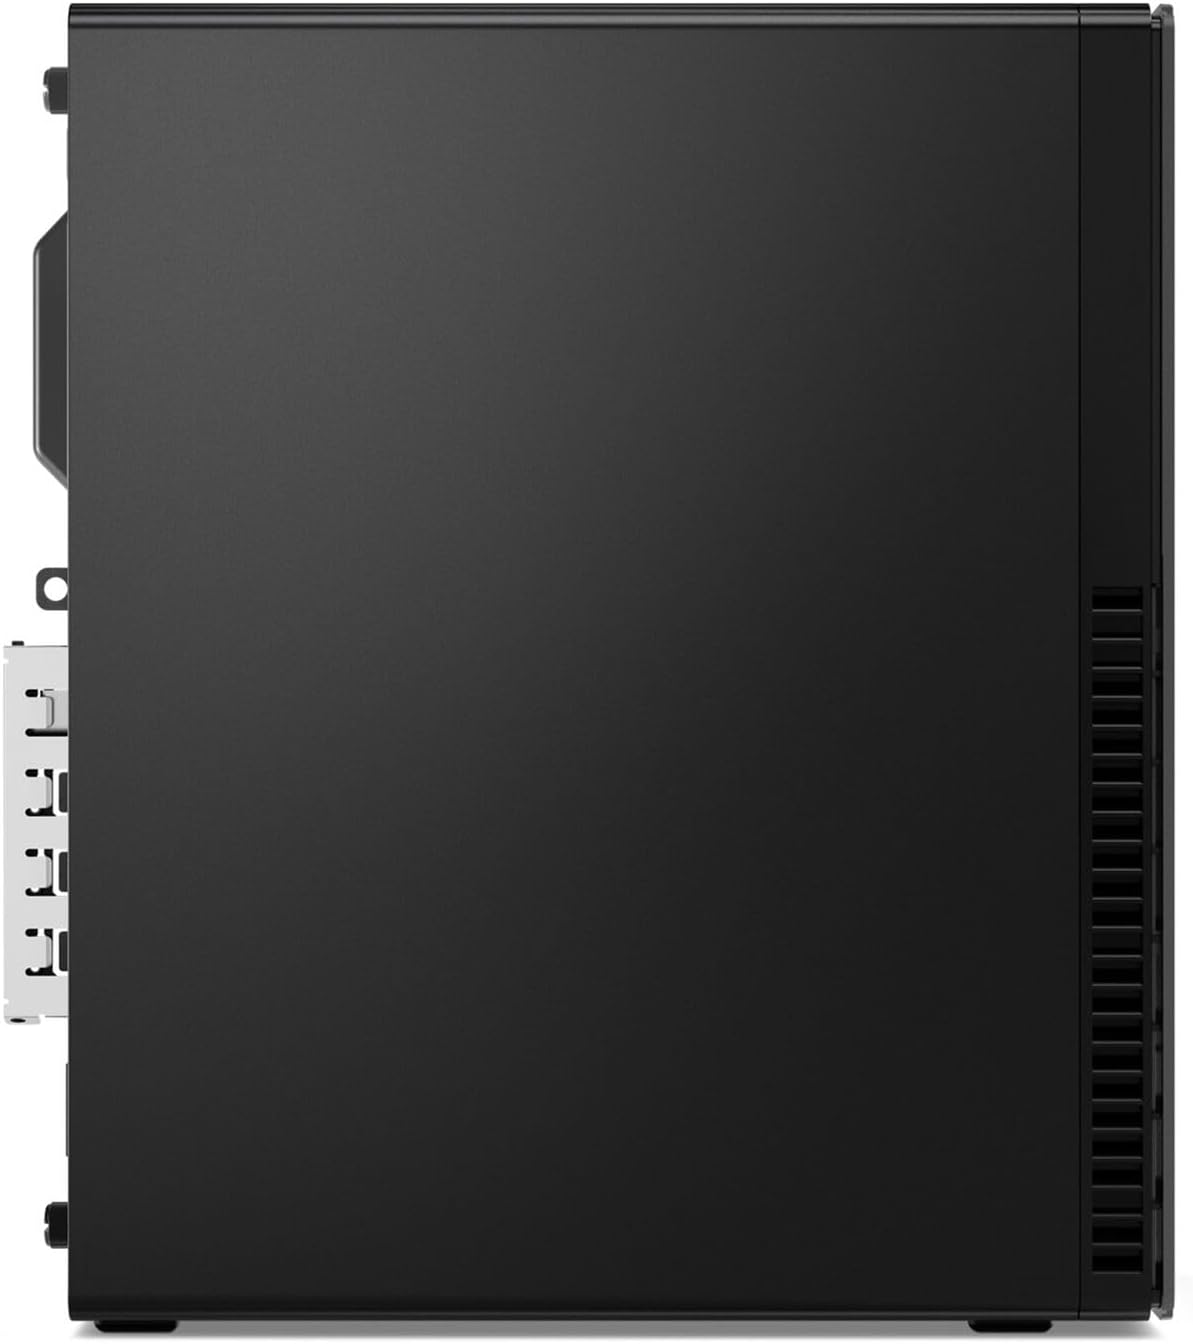 Lenovo 2023 ThinkCentre M75s Gen2 SFF Desktop AMD Ryzen 5 PRO 4650G 8GB DDR4 512GB PCIe SSD 1TB HDD AMD Radeon Graphics USB-C HDMI 2xDP HDMI DVD RJ-45 Serial Port Windows 10 Pro w/RE USB